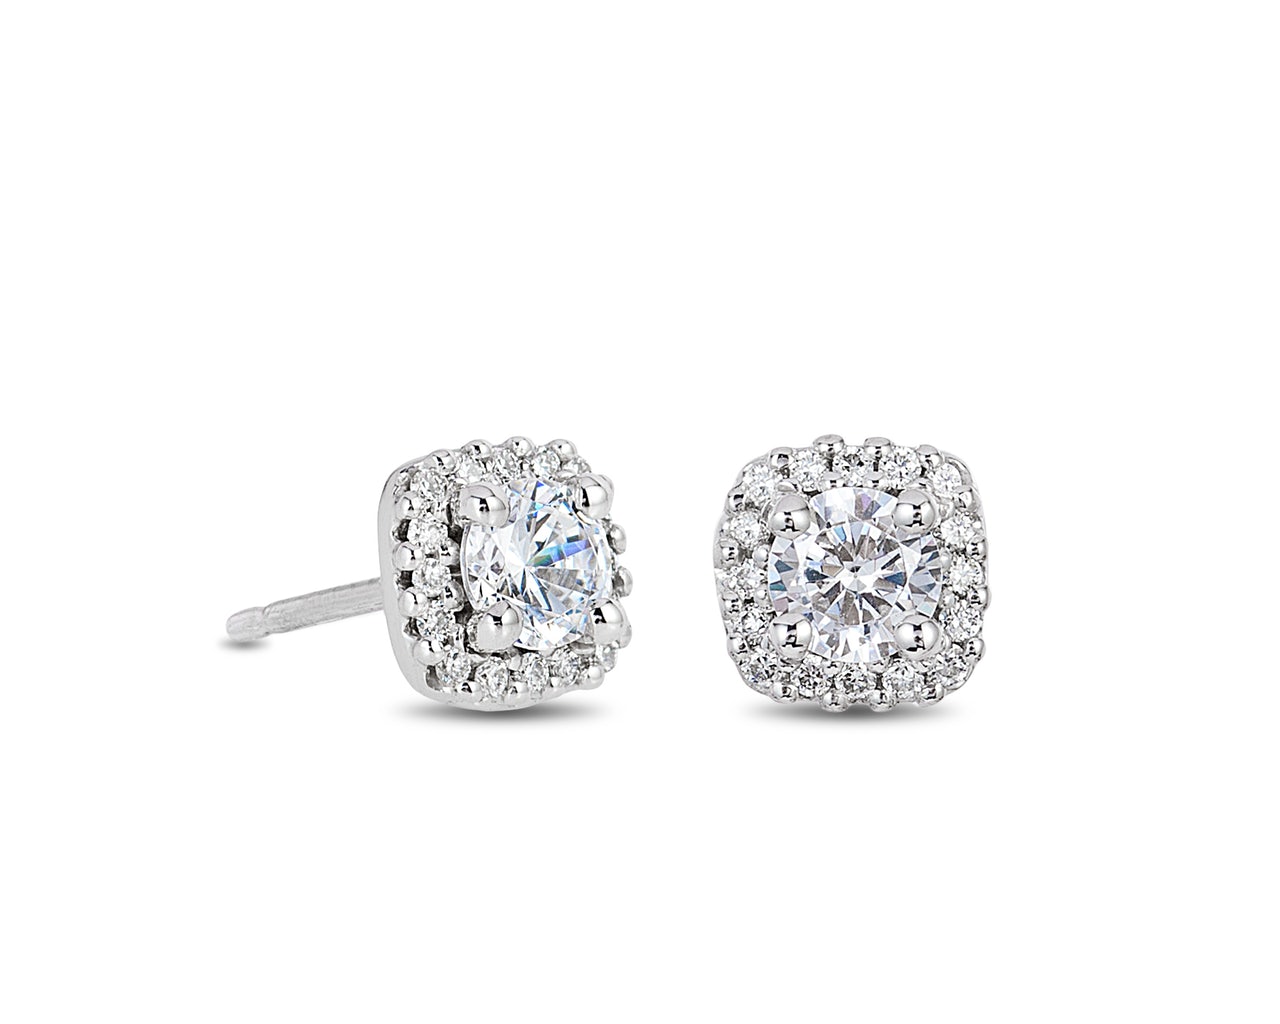 14K White Gold Diamond Halo Stud Earrings | M. Pope & Co.